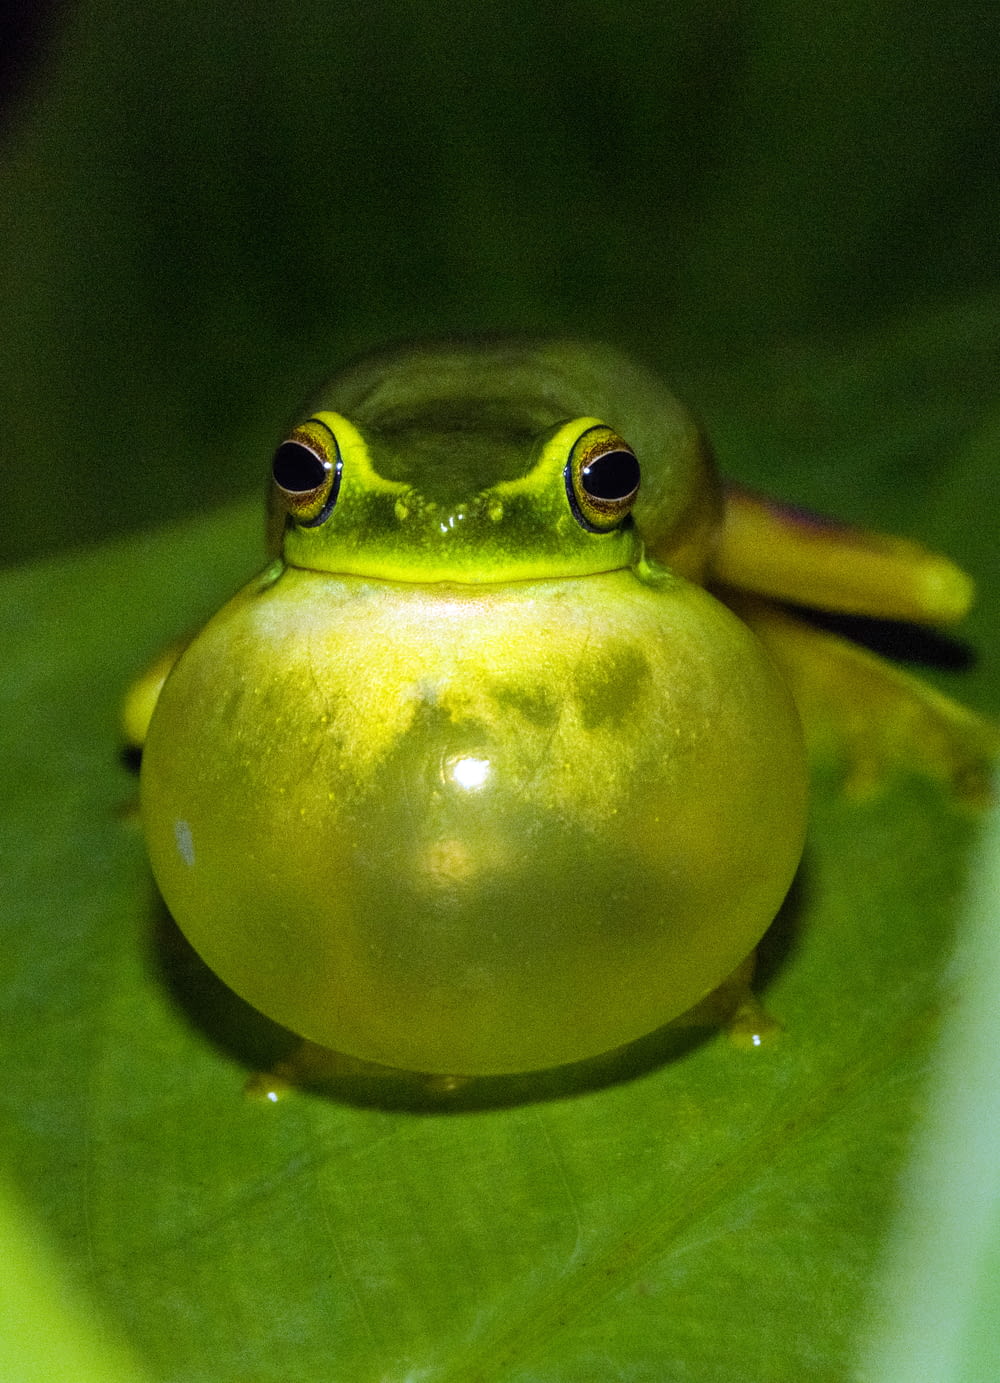 grenouille verte sur feuille verte